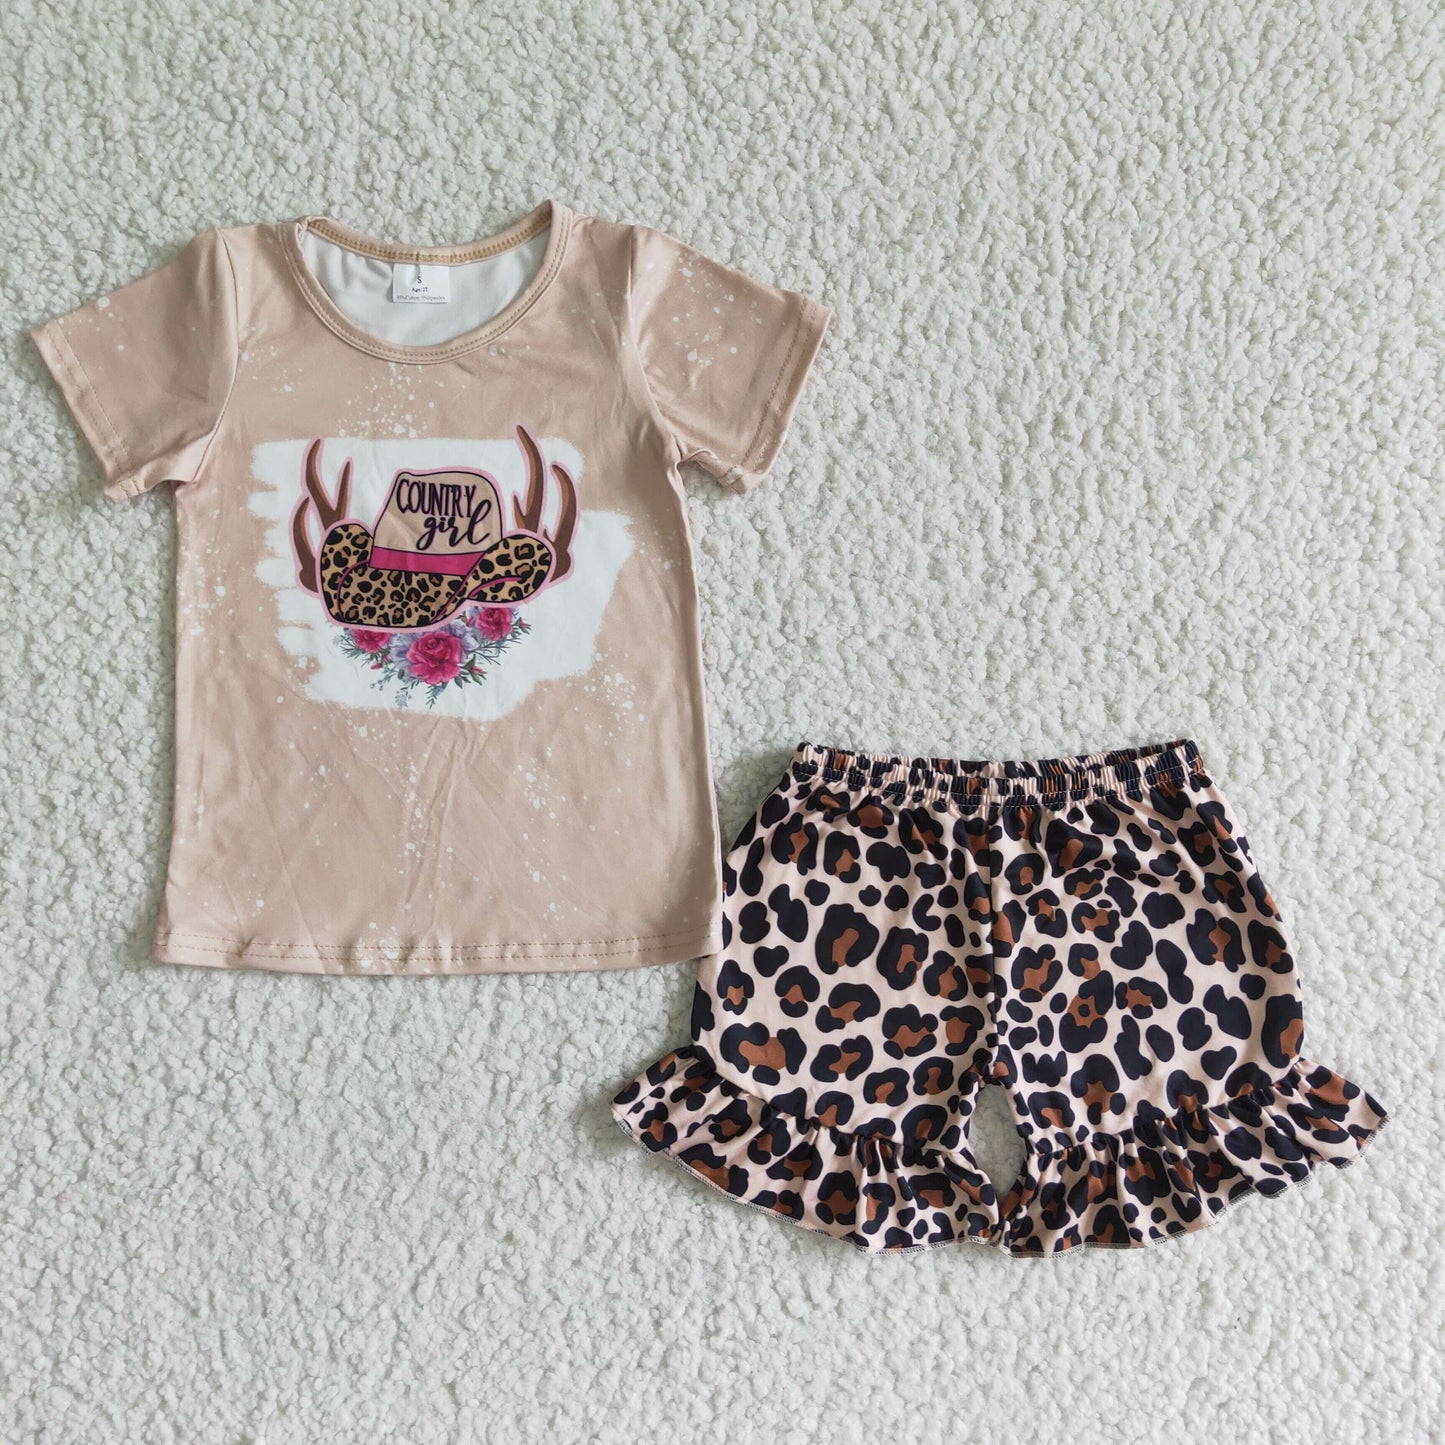 Country girl shirt leopard shorts girls summer clothes